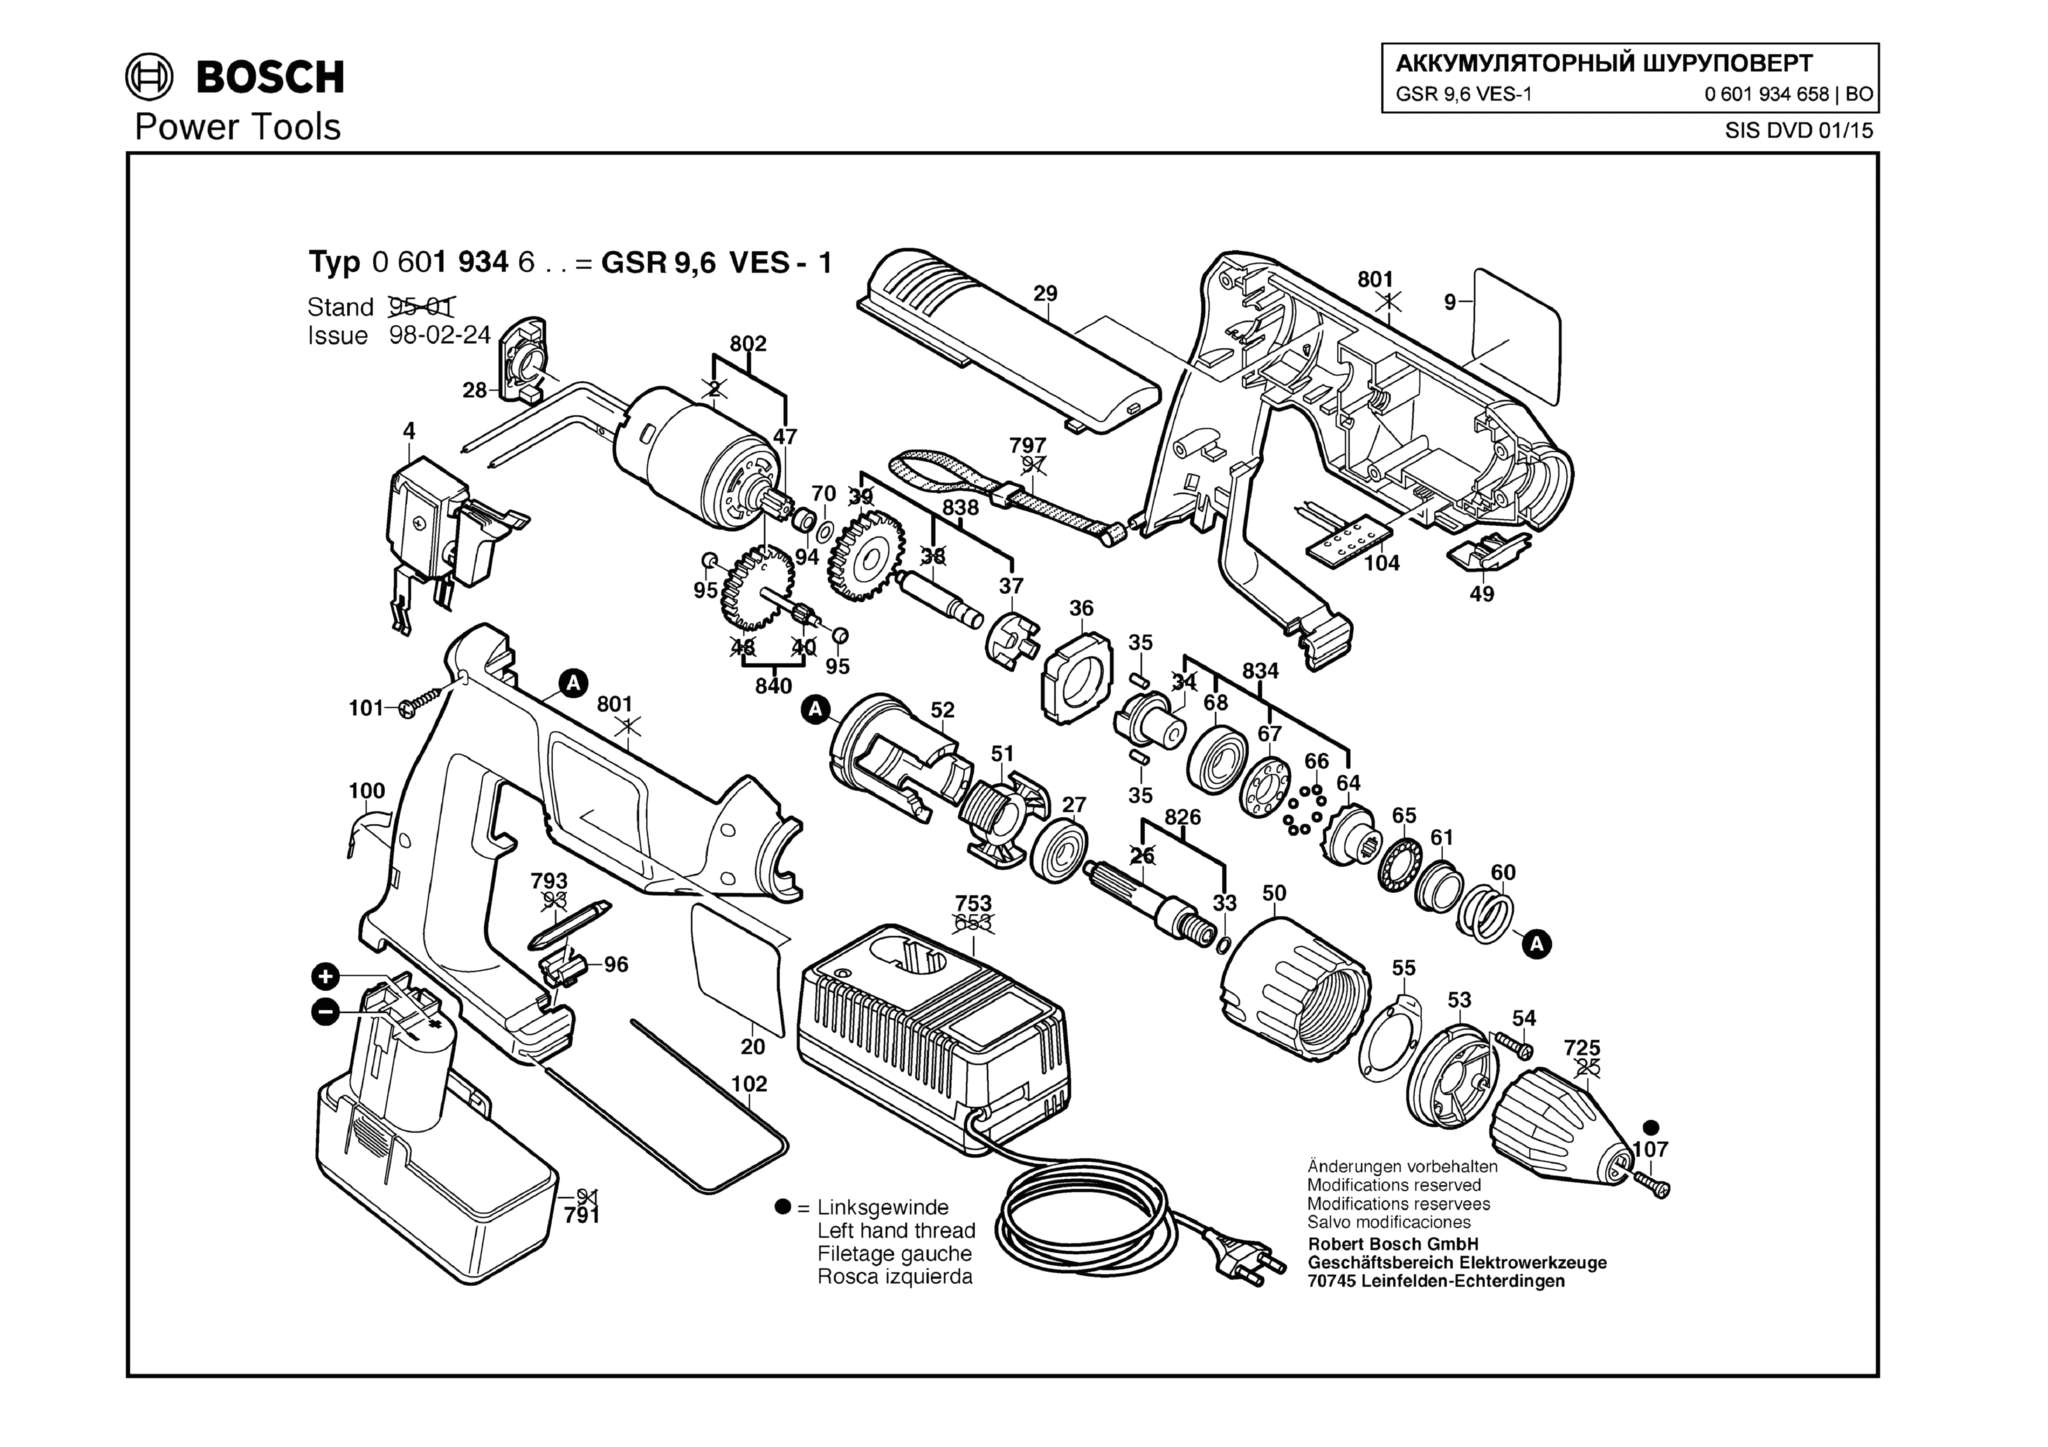 Запчасти, схема и деталировка Bosch GSR 9,6 VES-1 (ТИП 0601934658)